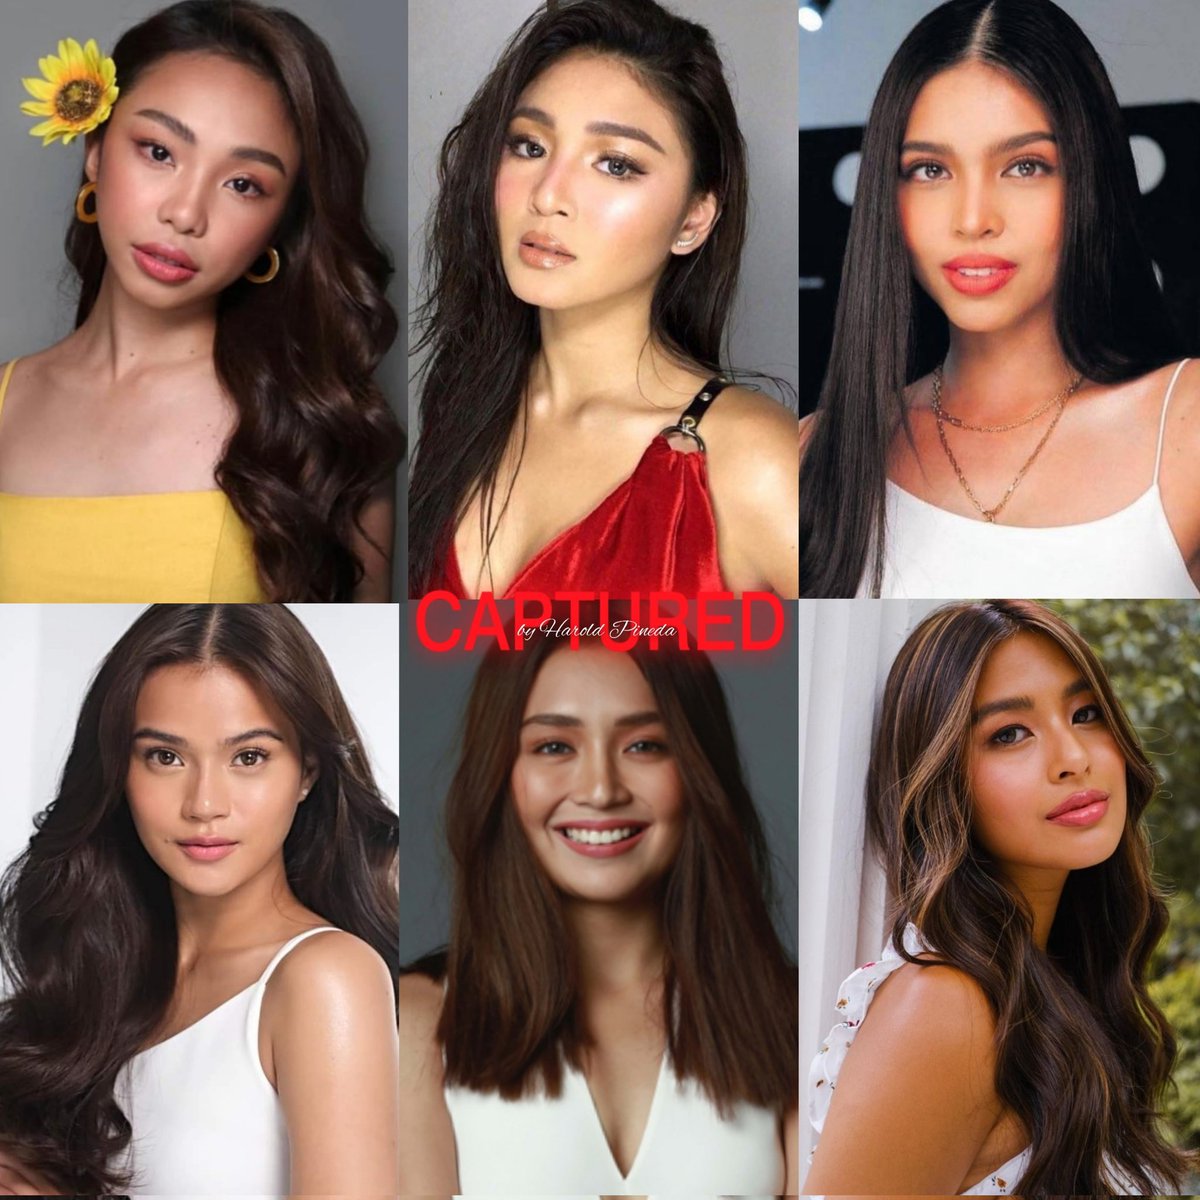 Six of the most beautiful MORENA young stars today, who's the prettiest for you? 👑

#MaymayEntrata   #NadineLustre  #MaineMendoza 
#MarisRacal  #KathrynBernardo #GabbiGarcia